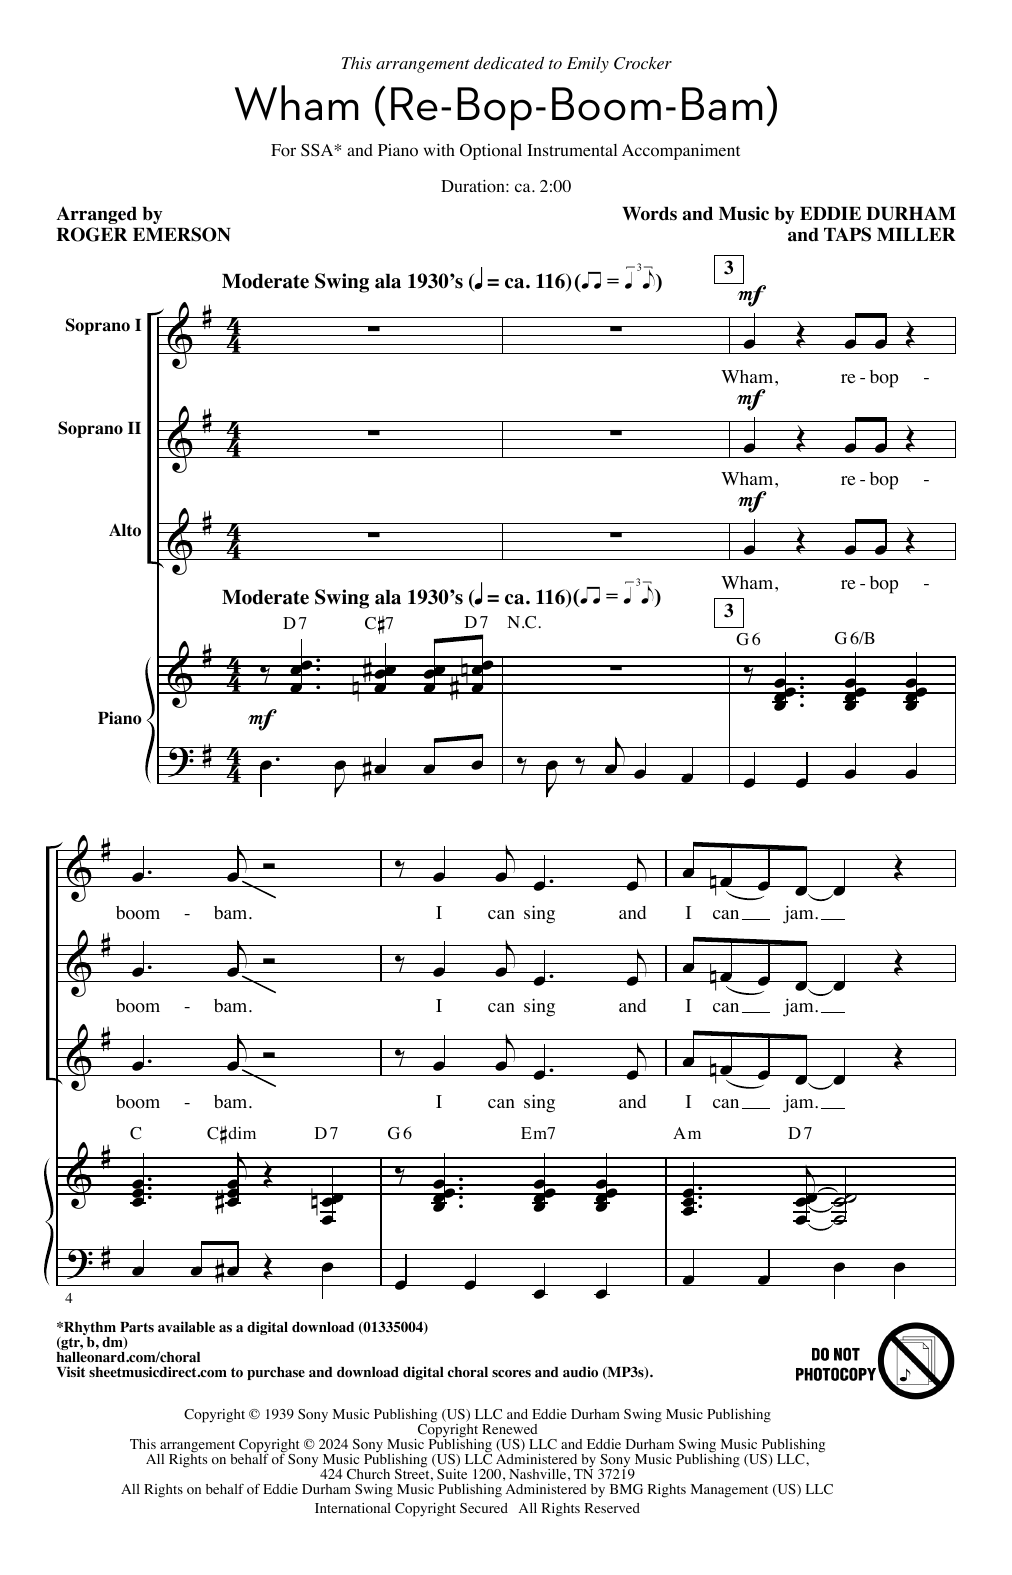 Mildred Bailey Wham (Re-Bop-Boom-Bam) sheet music notes and chords arranged for SSA Choir